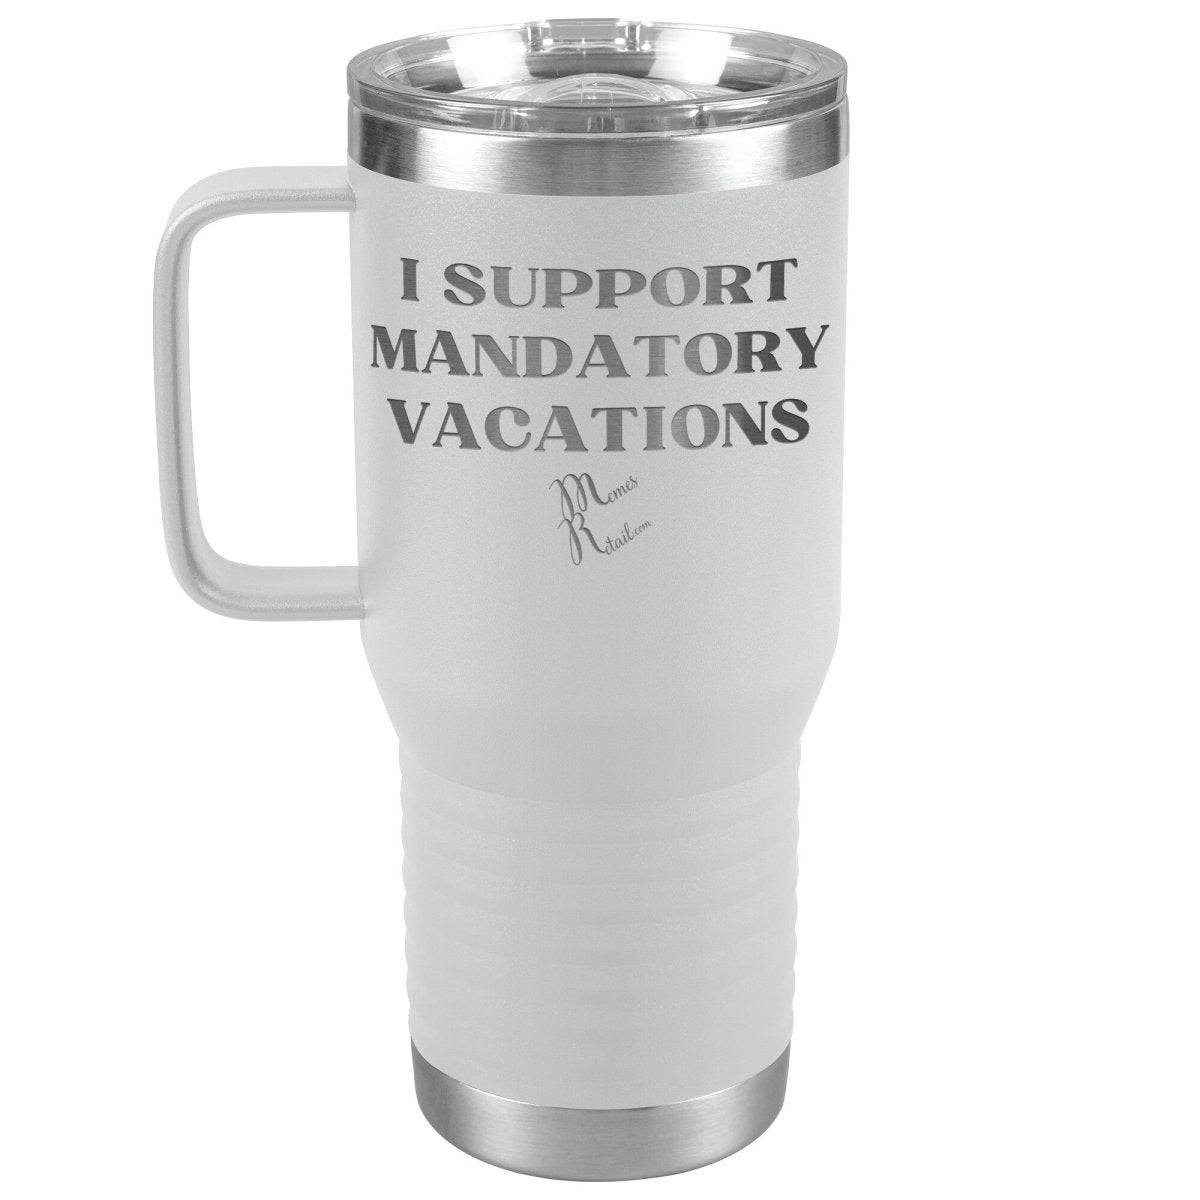 I support mandatory vacations Tumblers, 20oz Travel Tumbler / White - MemesRetail.com